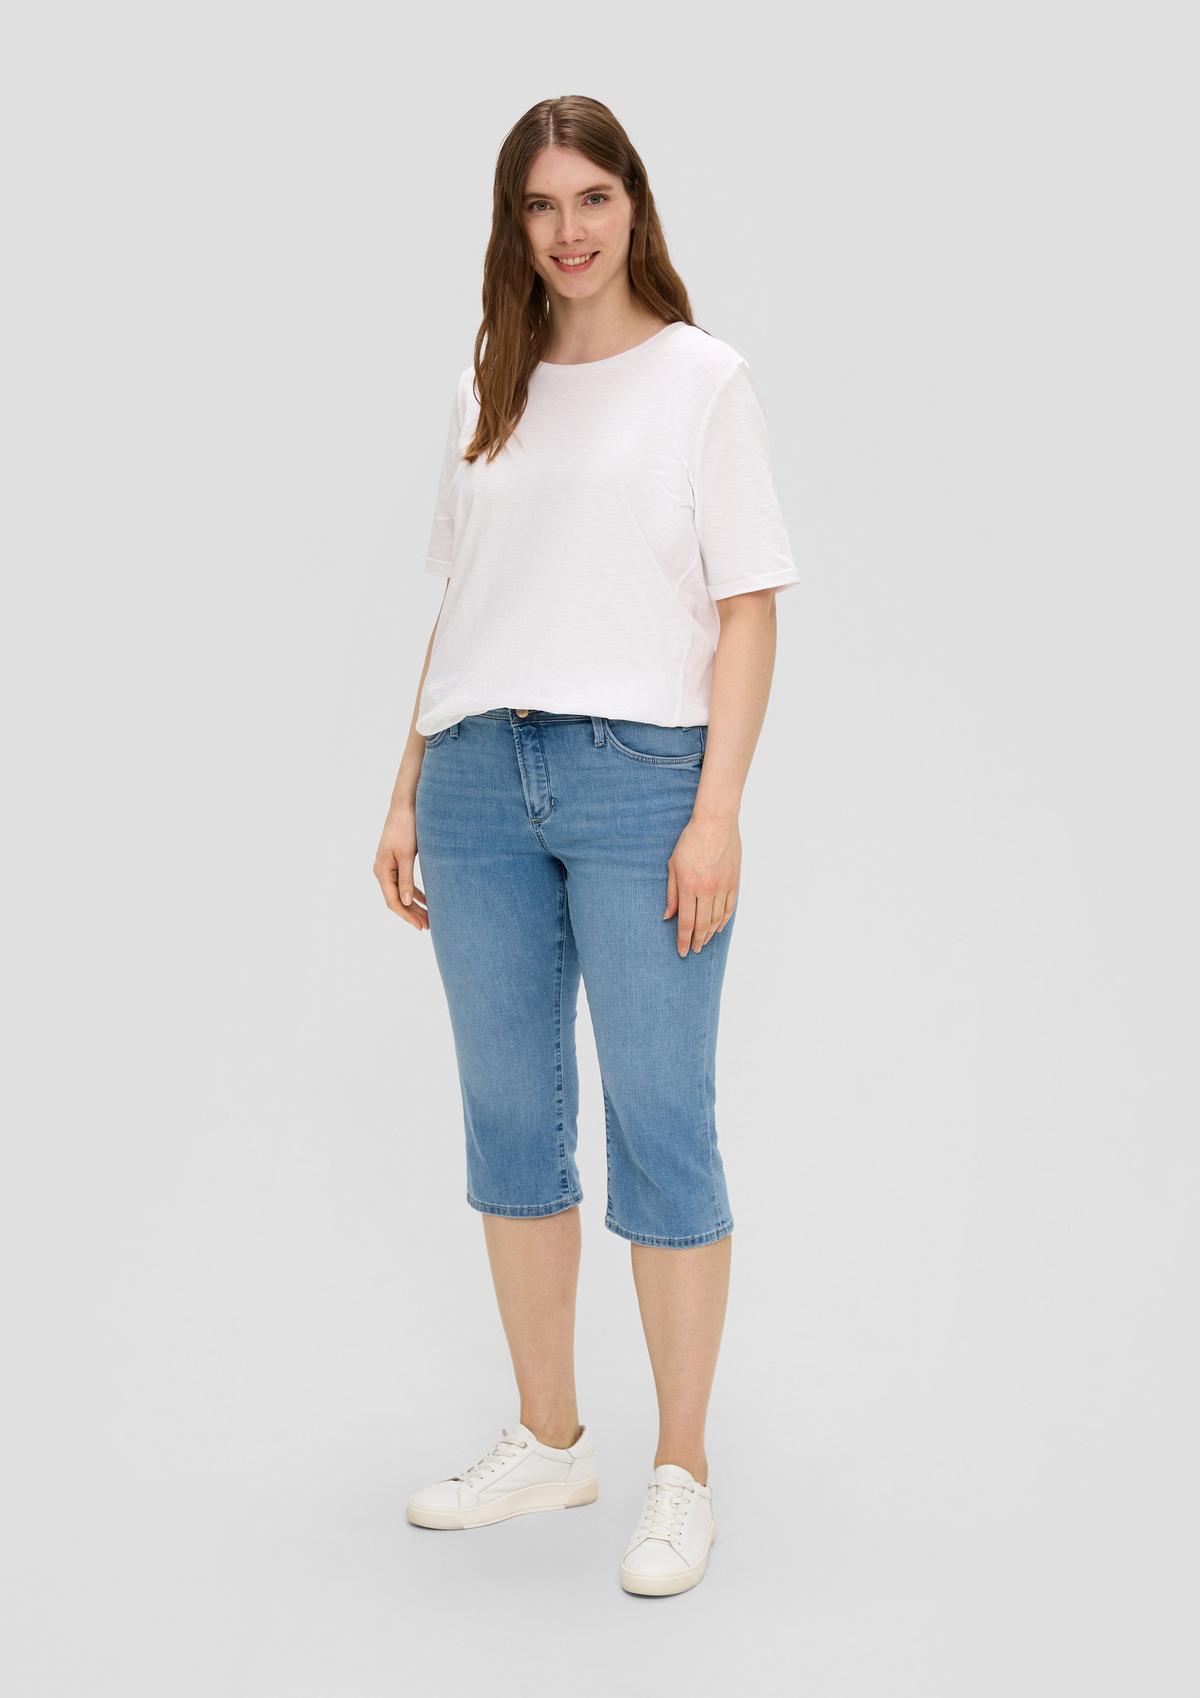 s.Oliver Capri jeans / regular fit / mid rise / slim leg